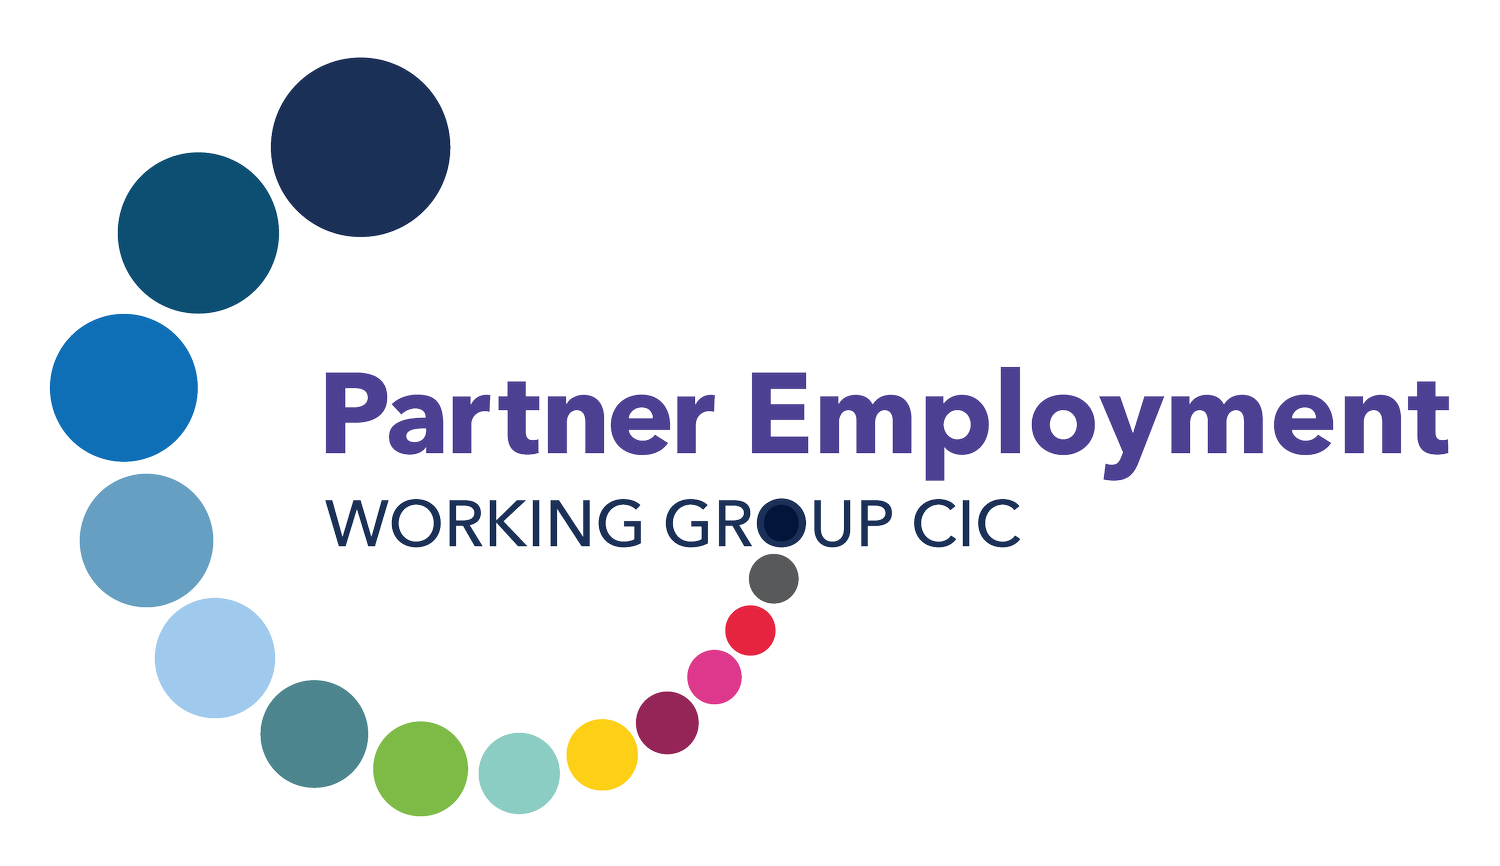 Partner Employment Working Group